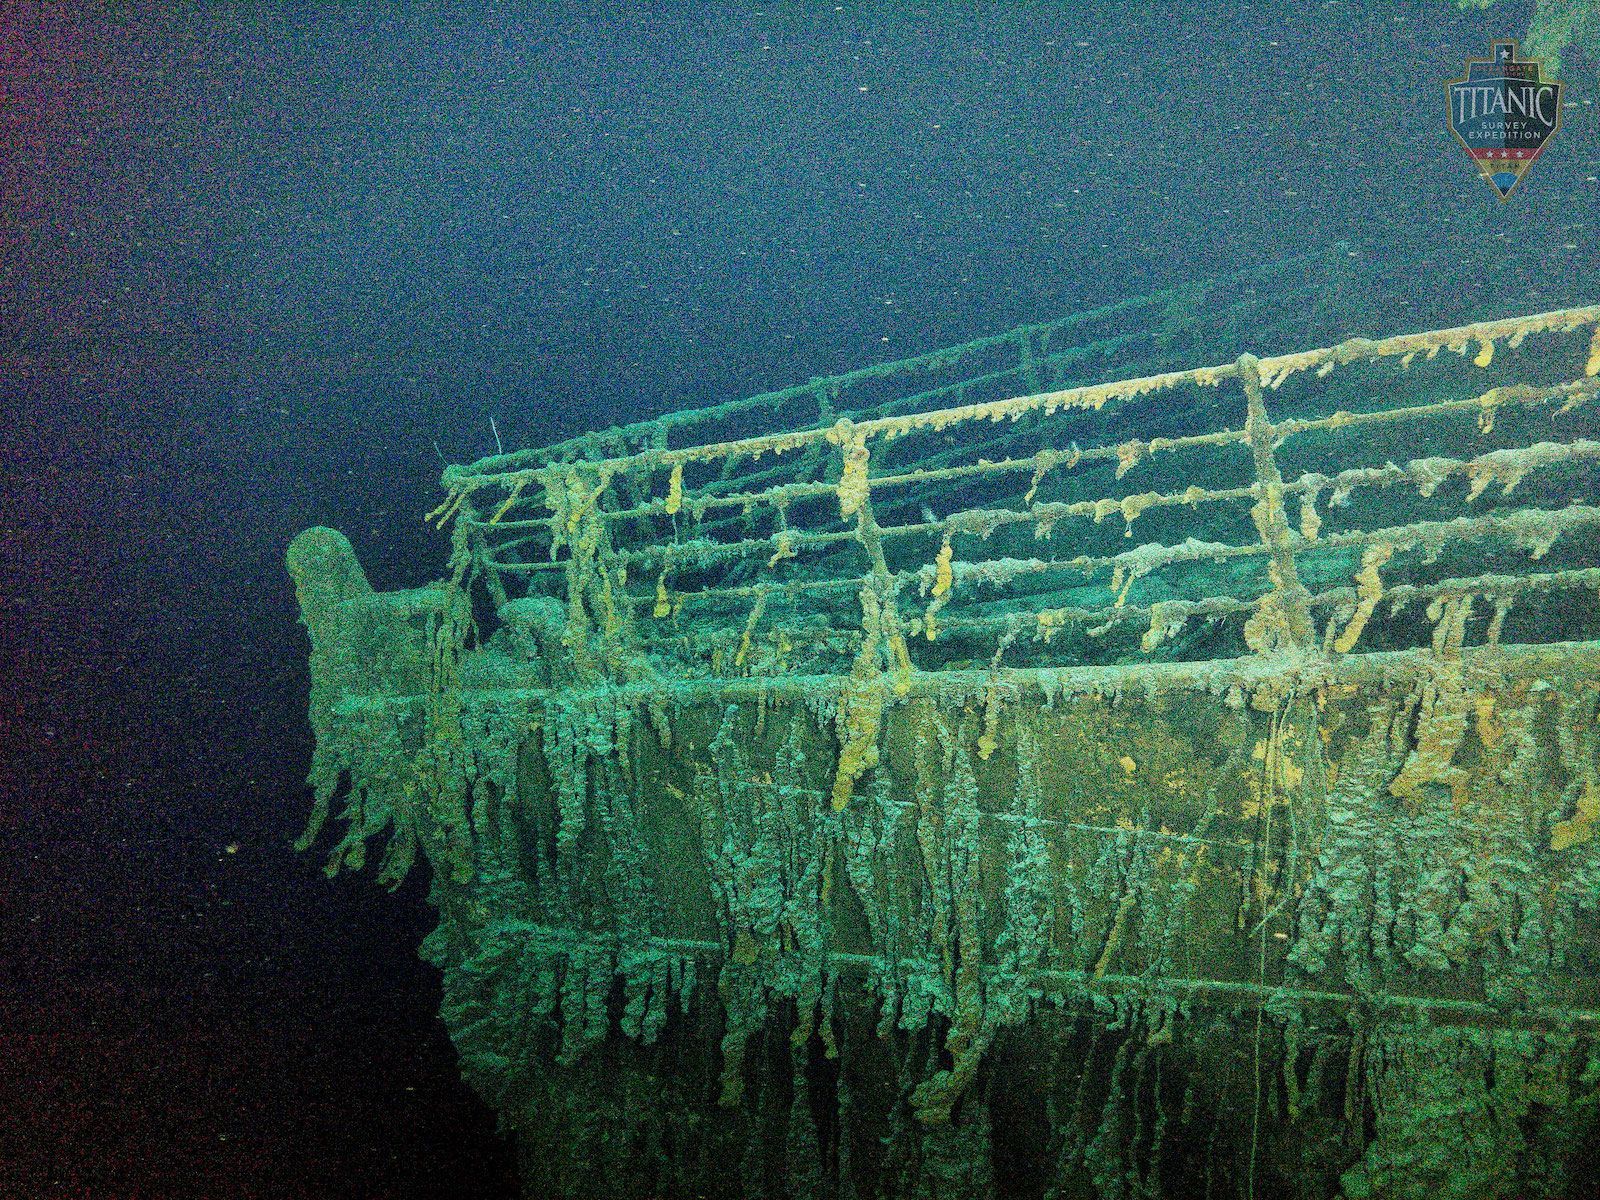 human remains found on shipwrecks